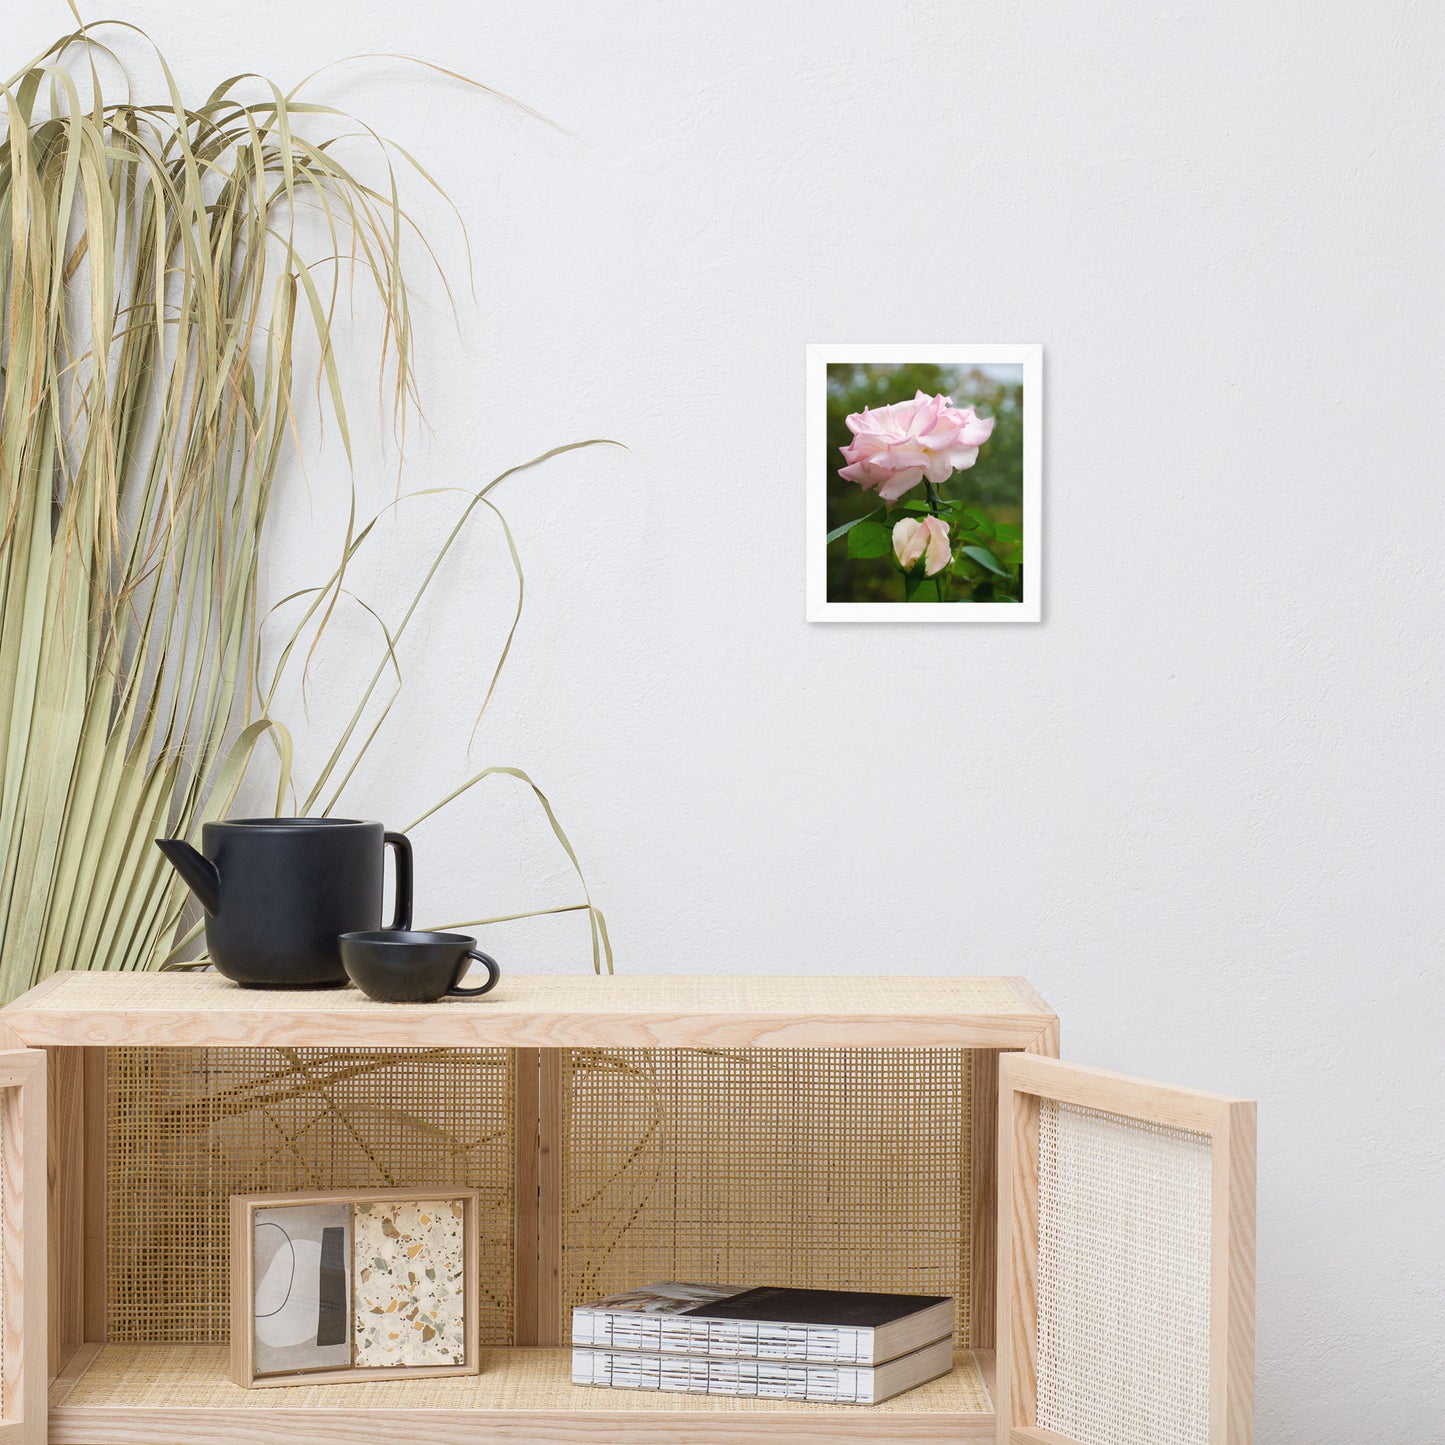 Flower Prints Framed: Admiration - Pink Rose Floral / Botanical / Nature Photo Framed Wall Art Print - Artwork - Wall Decor - Home Decor